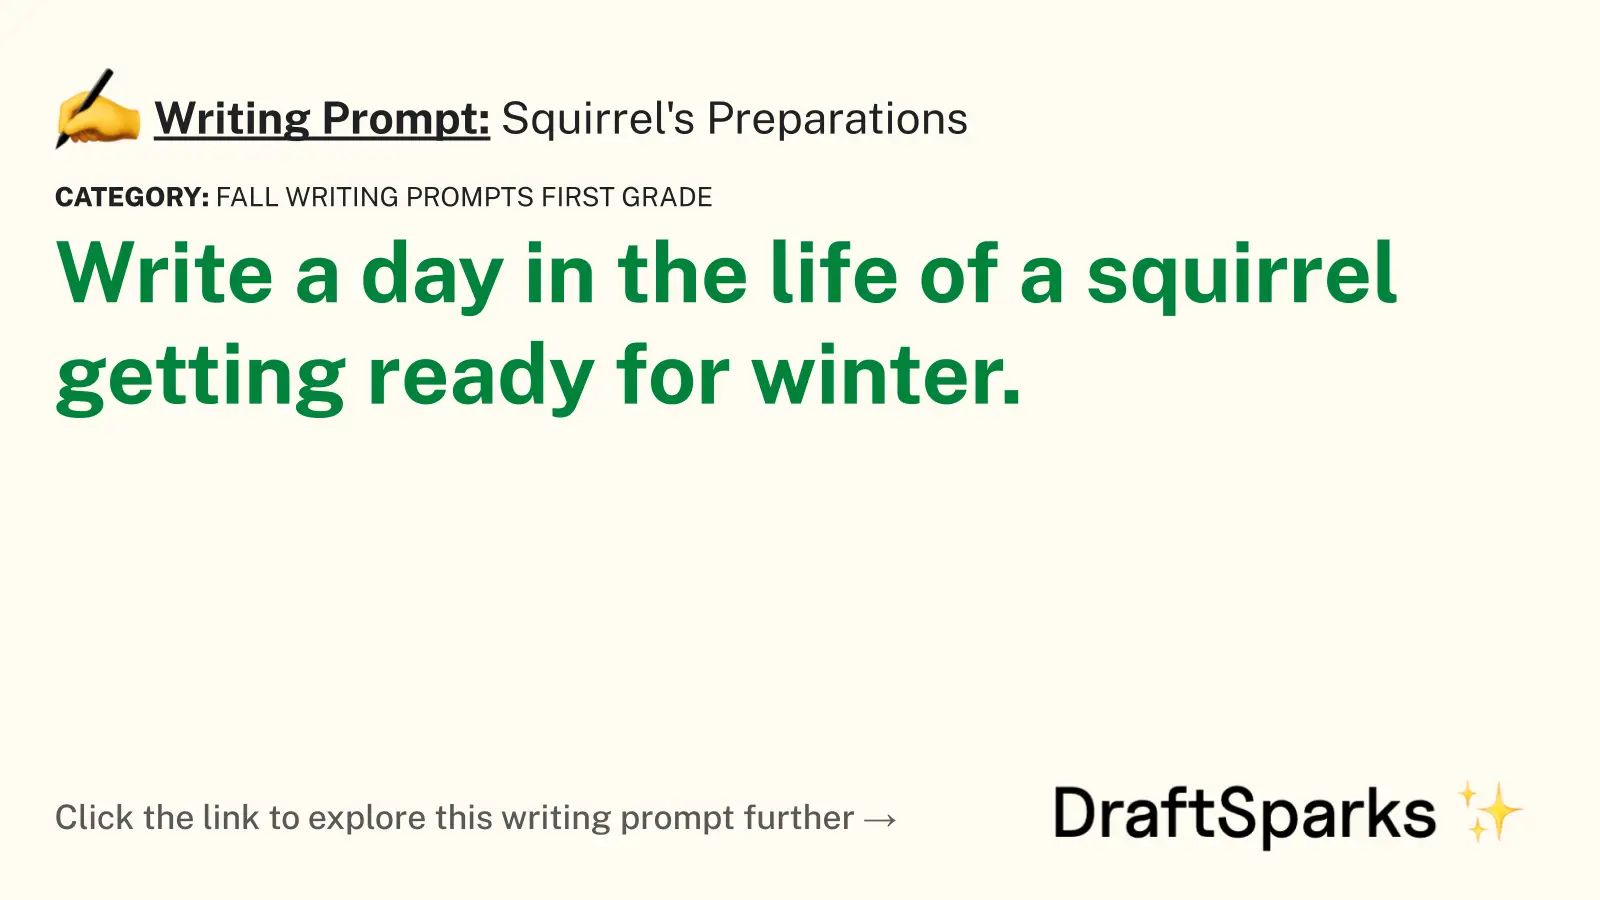 Squirrel’s Preparations